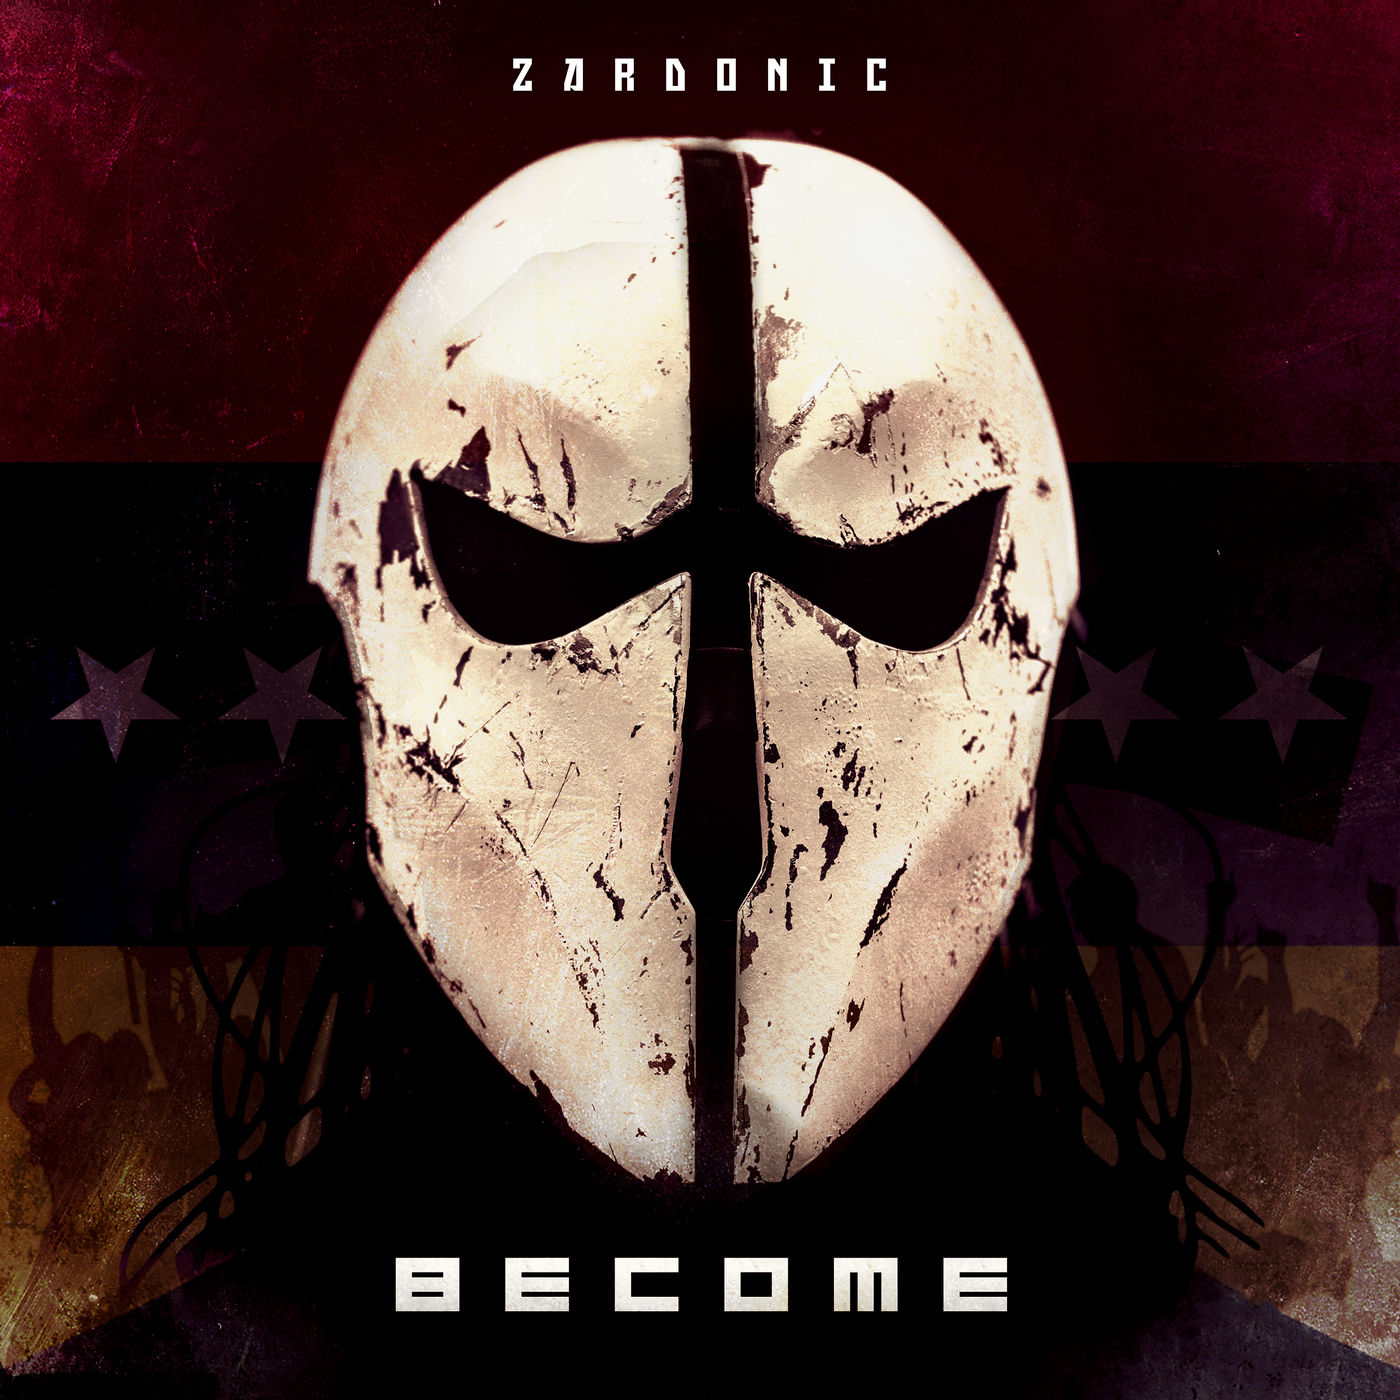 Zardonic - Become (2018) Album Info